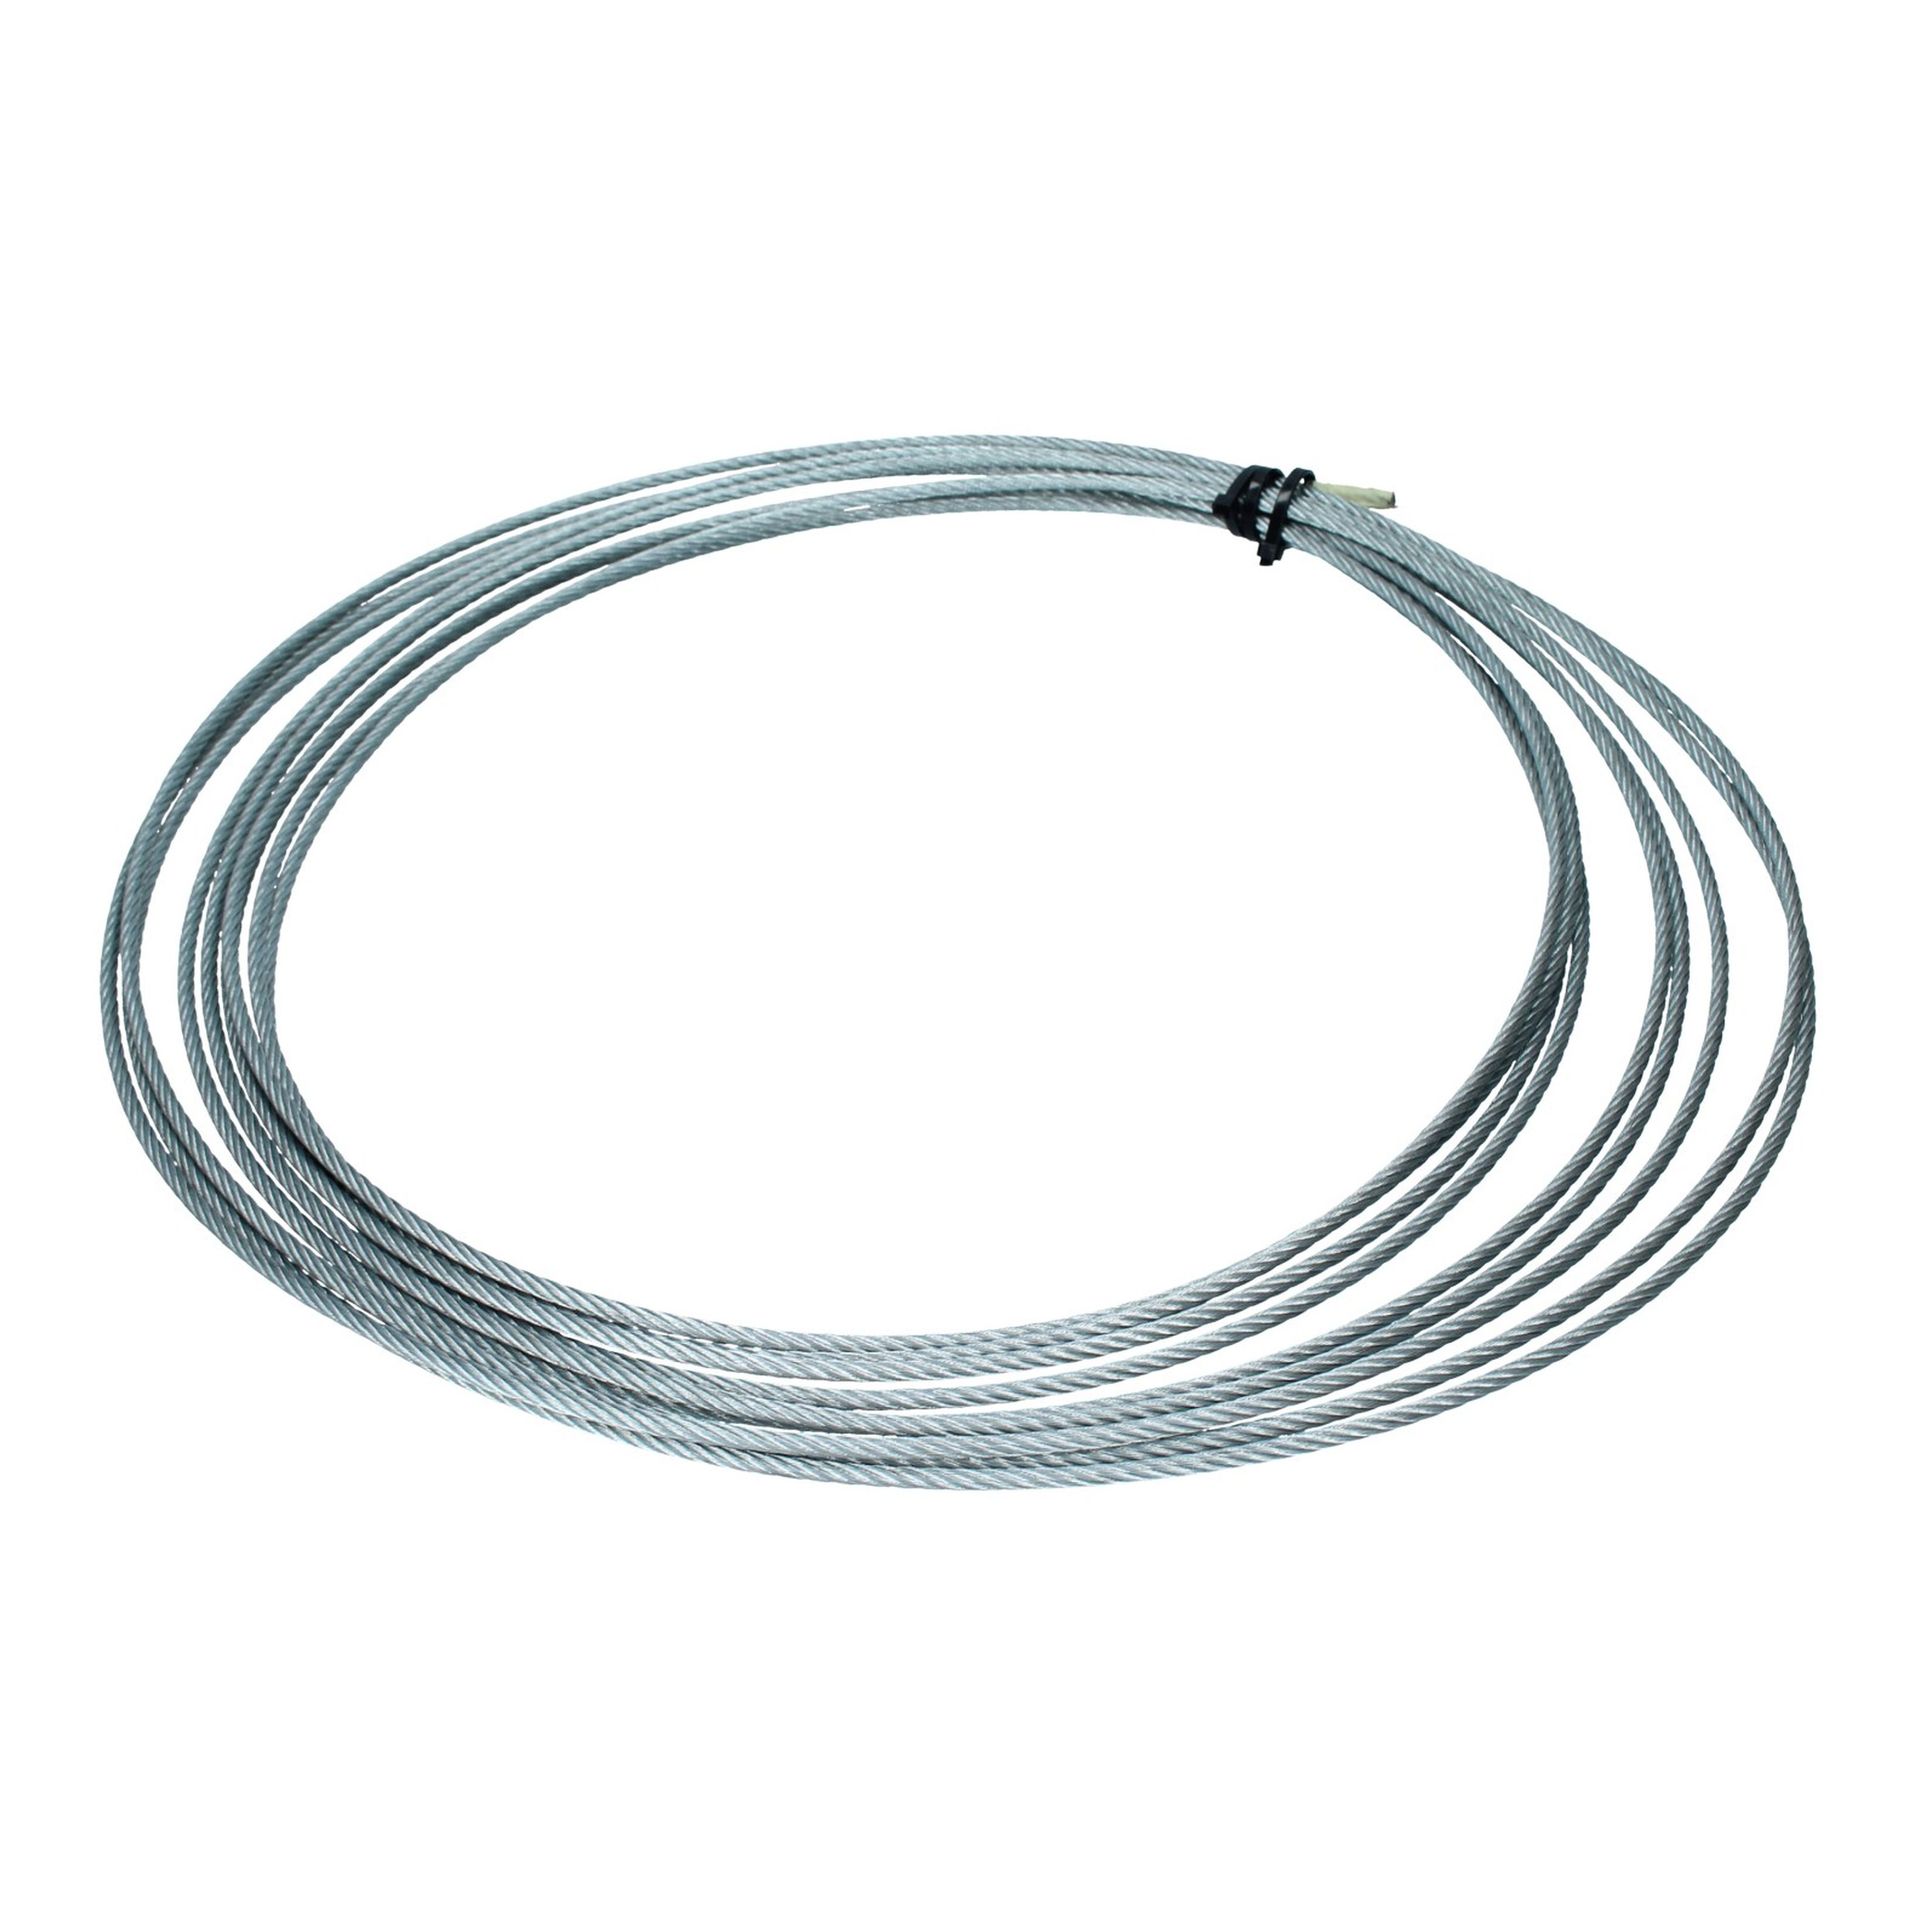 Rear Droop Stop Cable (Per M)